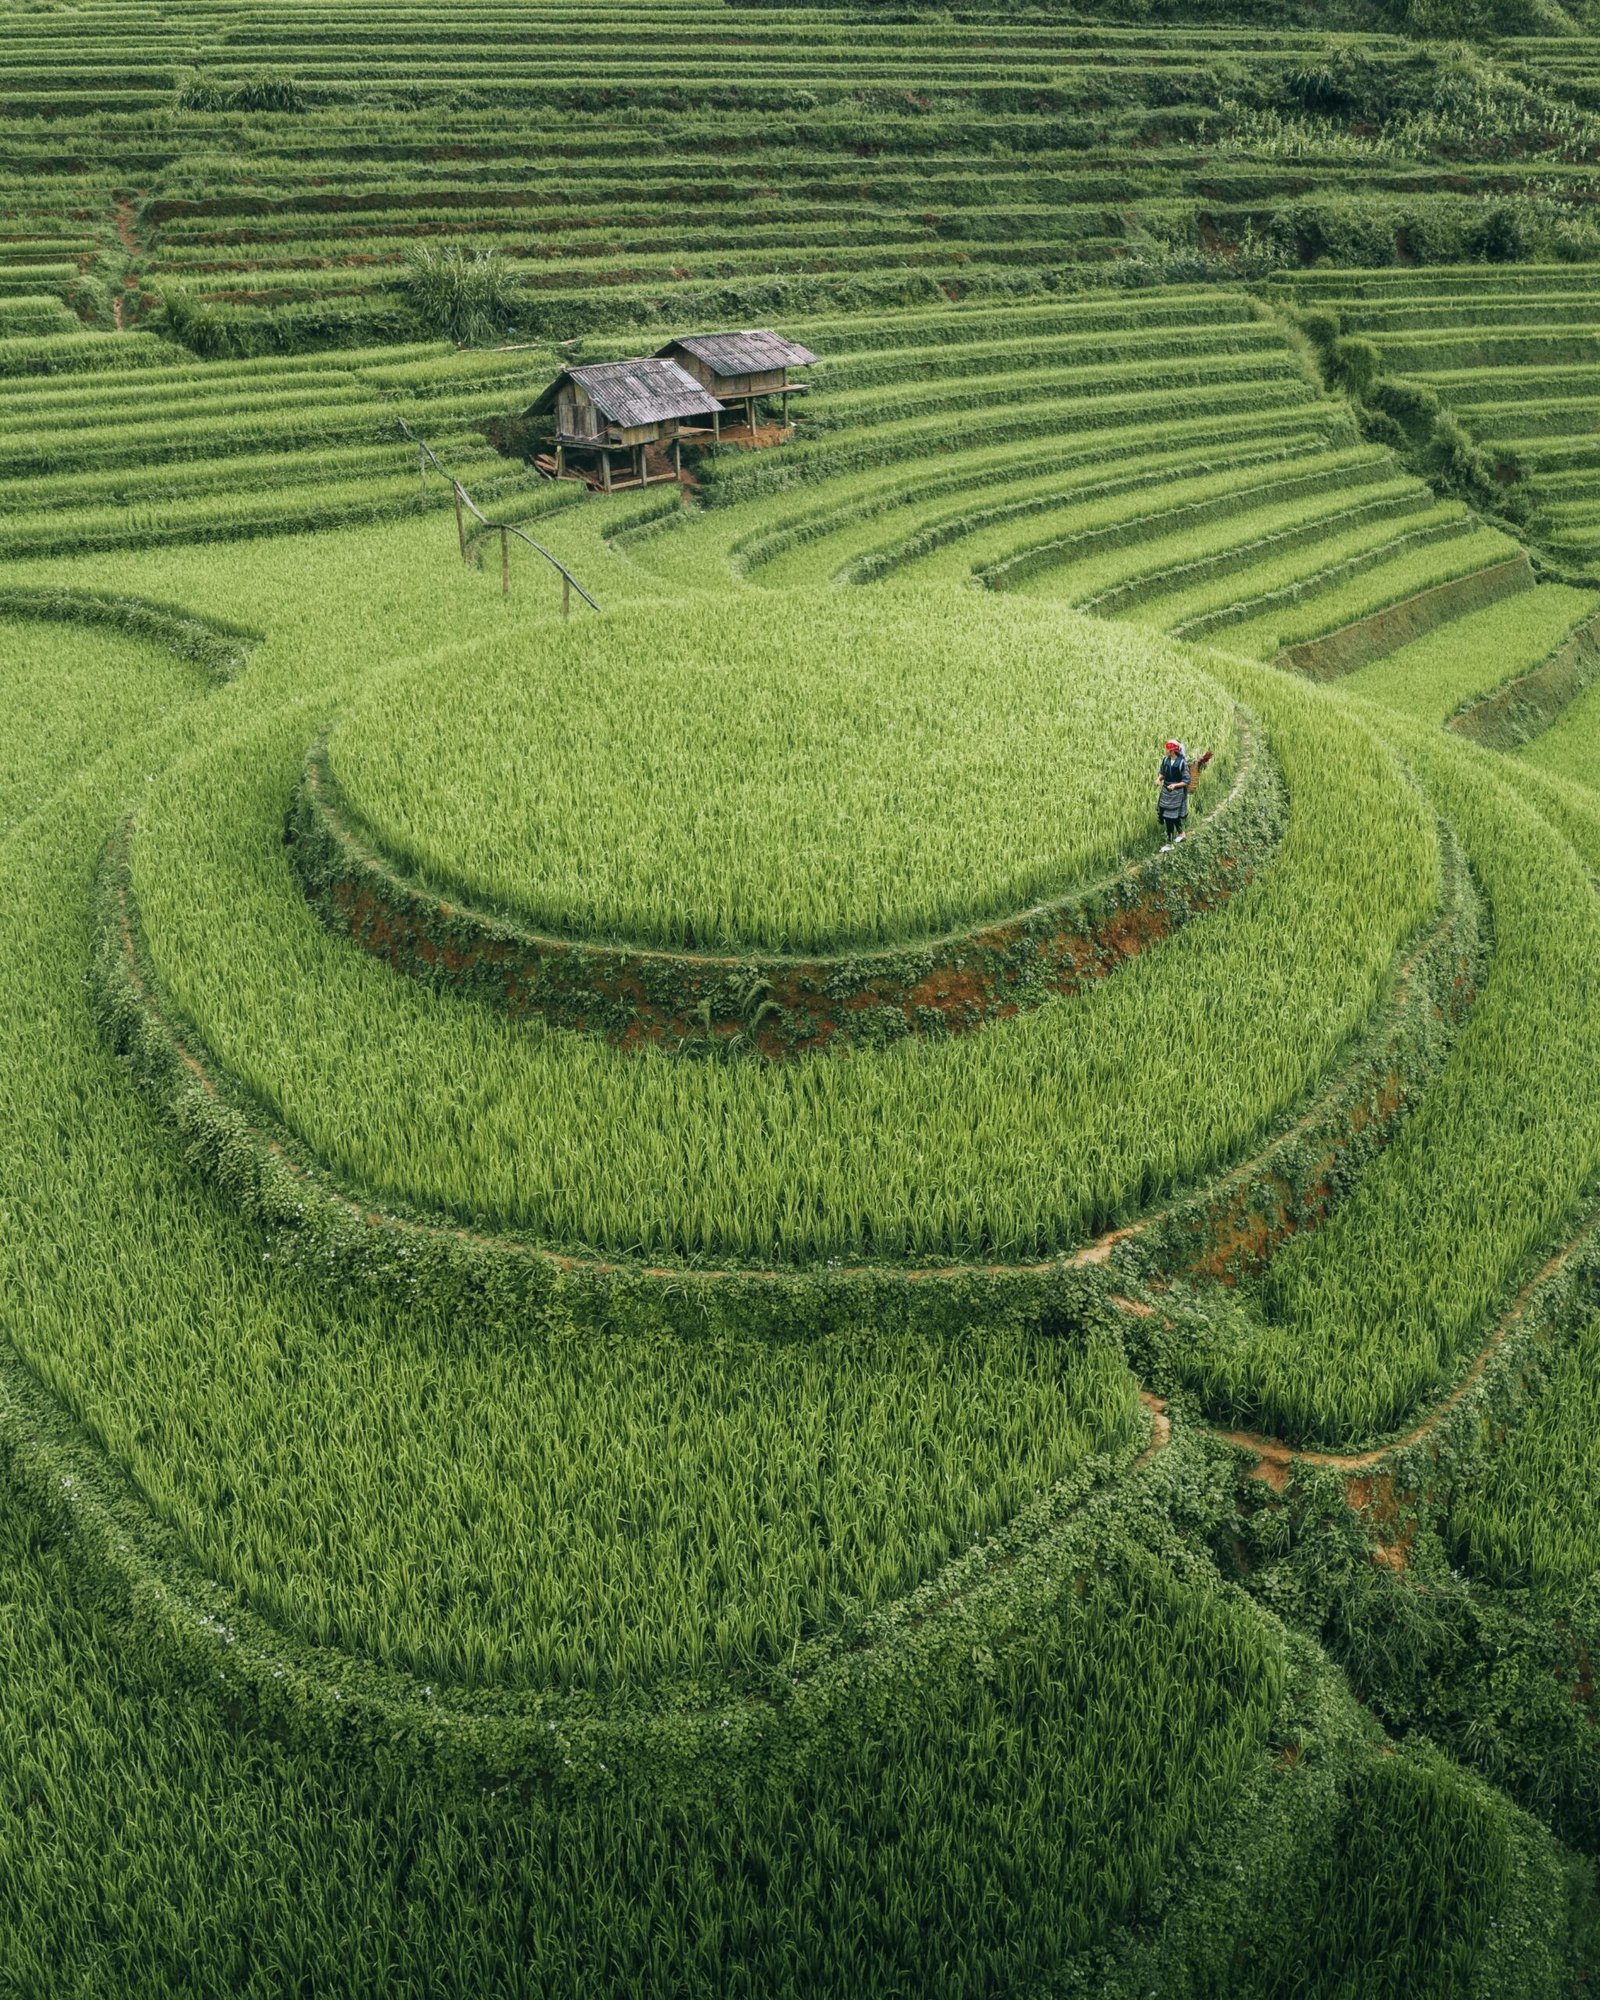 Drone shot of the rice fields in Mu Cang Chai, Vietnam